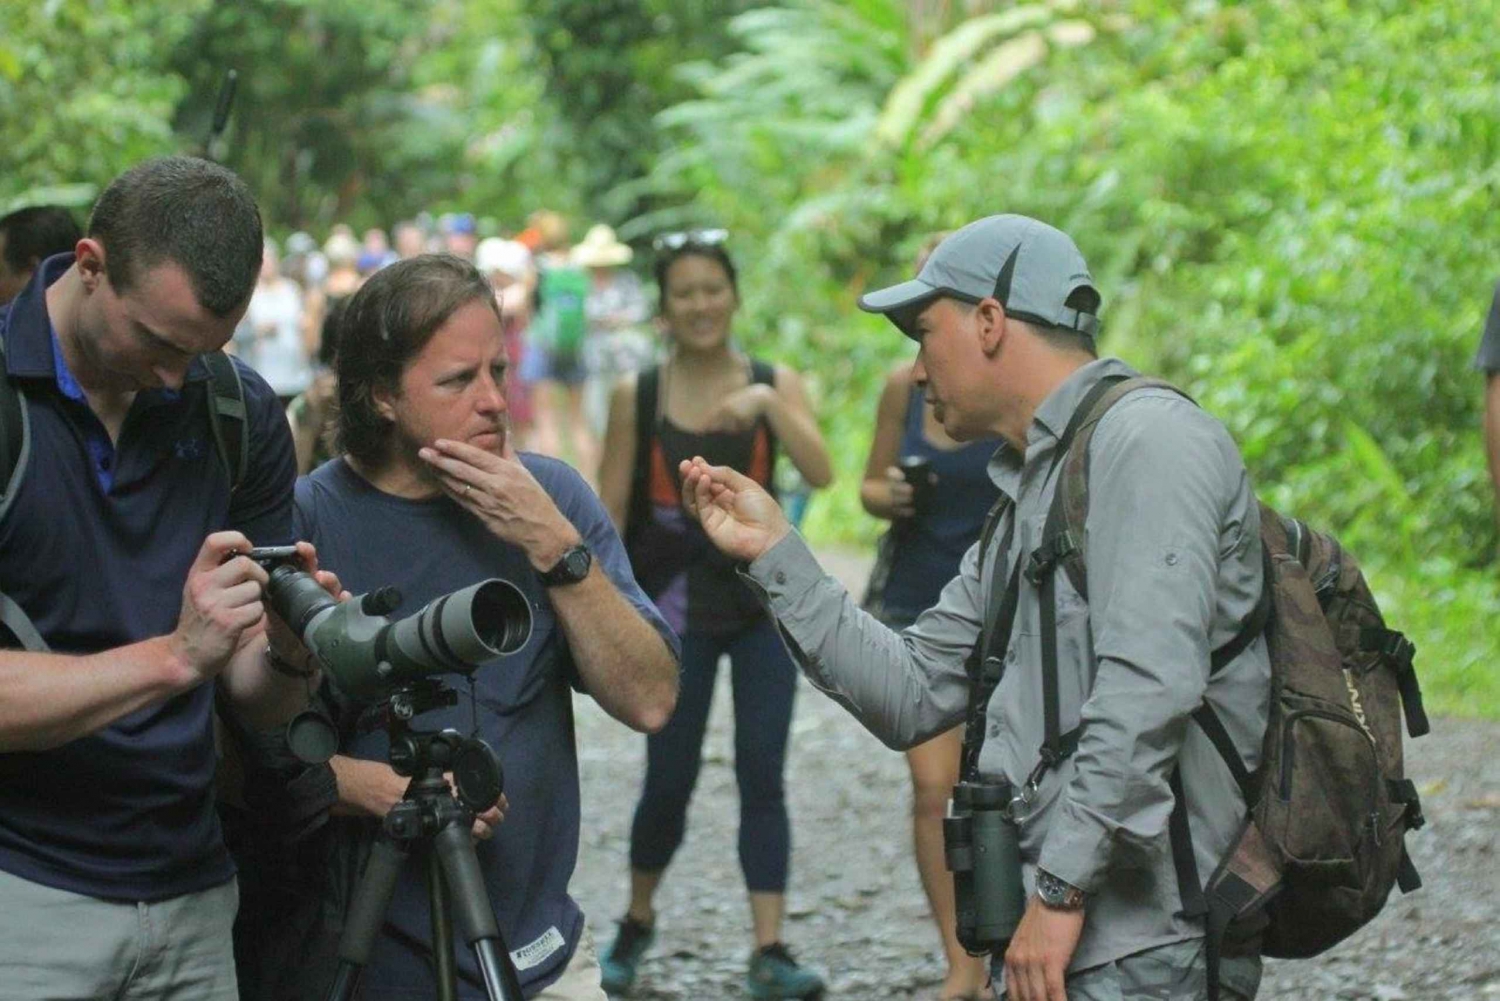 Costa Rica: Manuel Antonio National Park Guided Tour